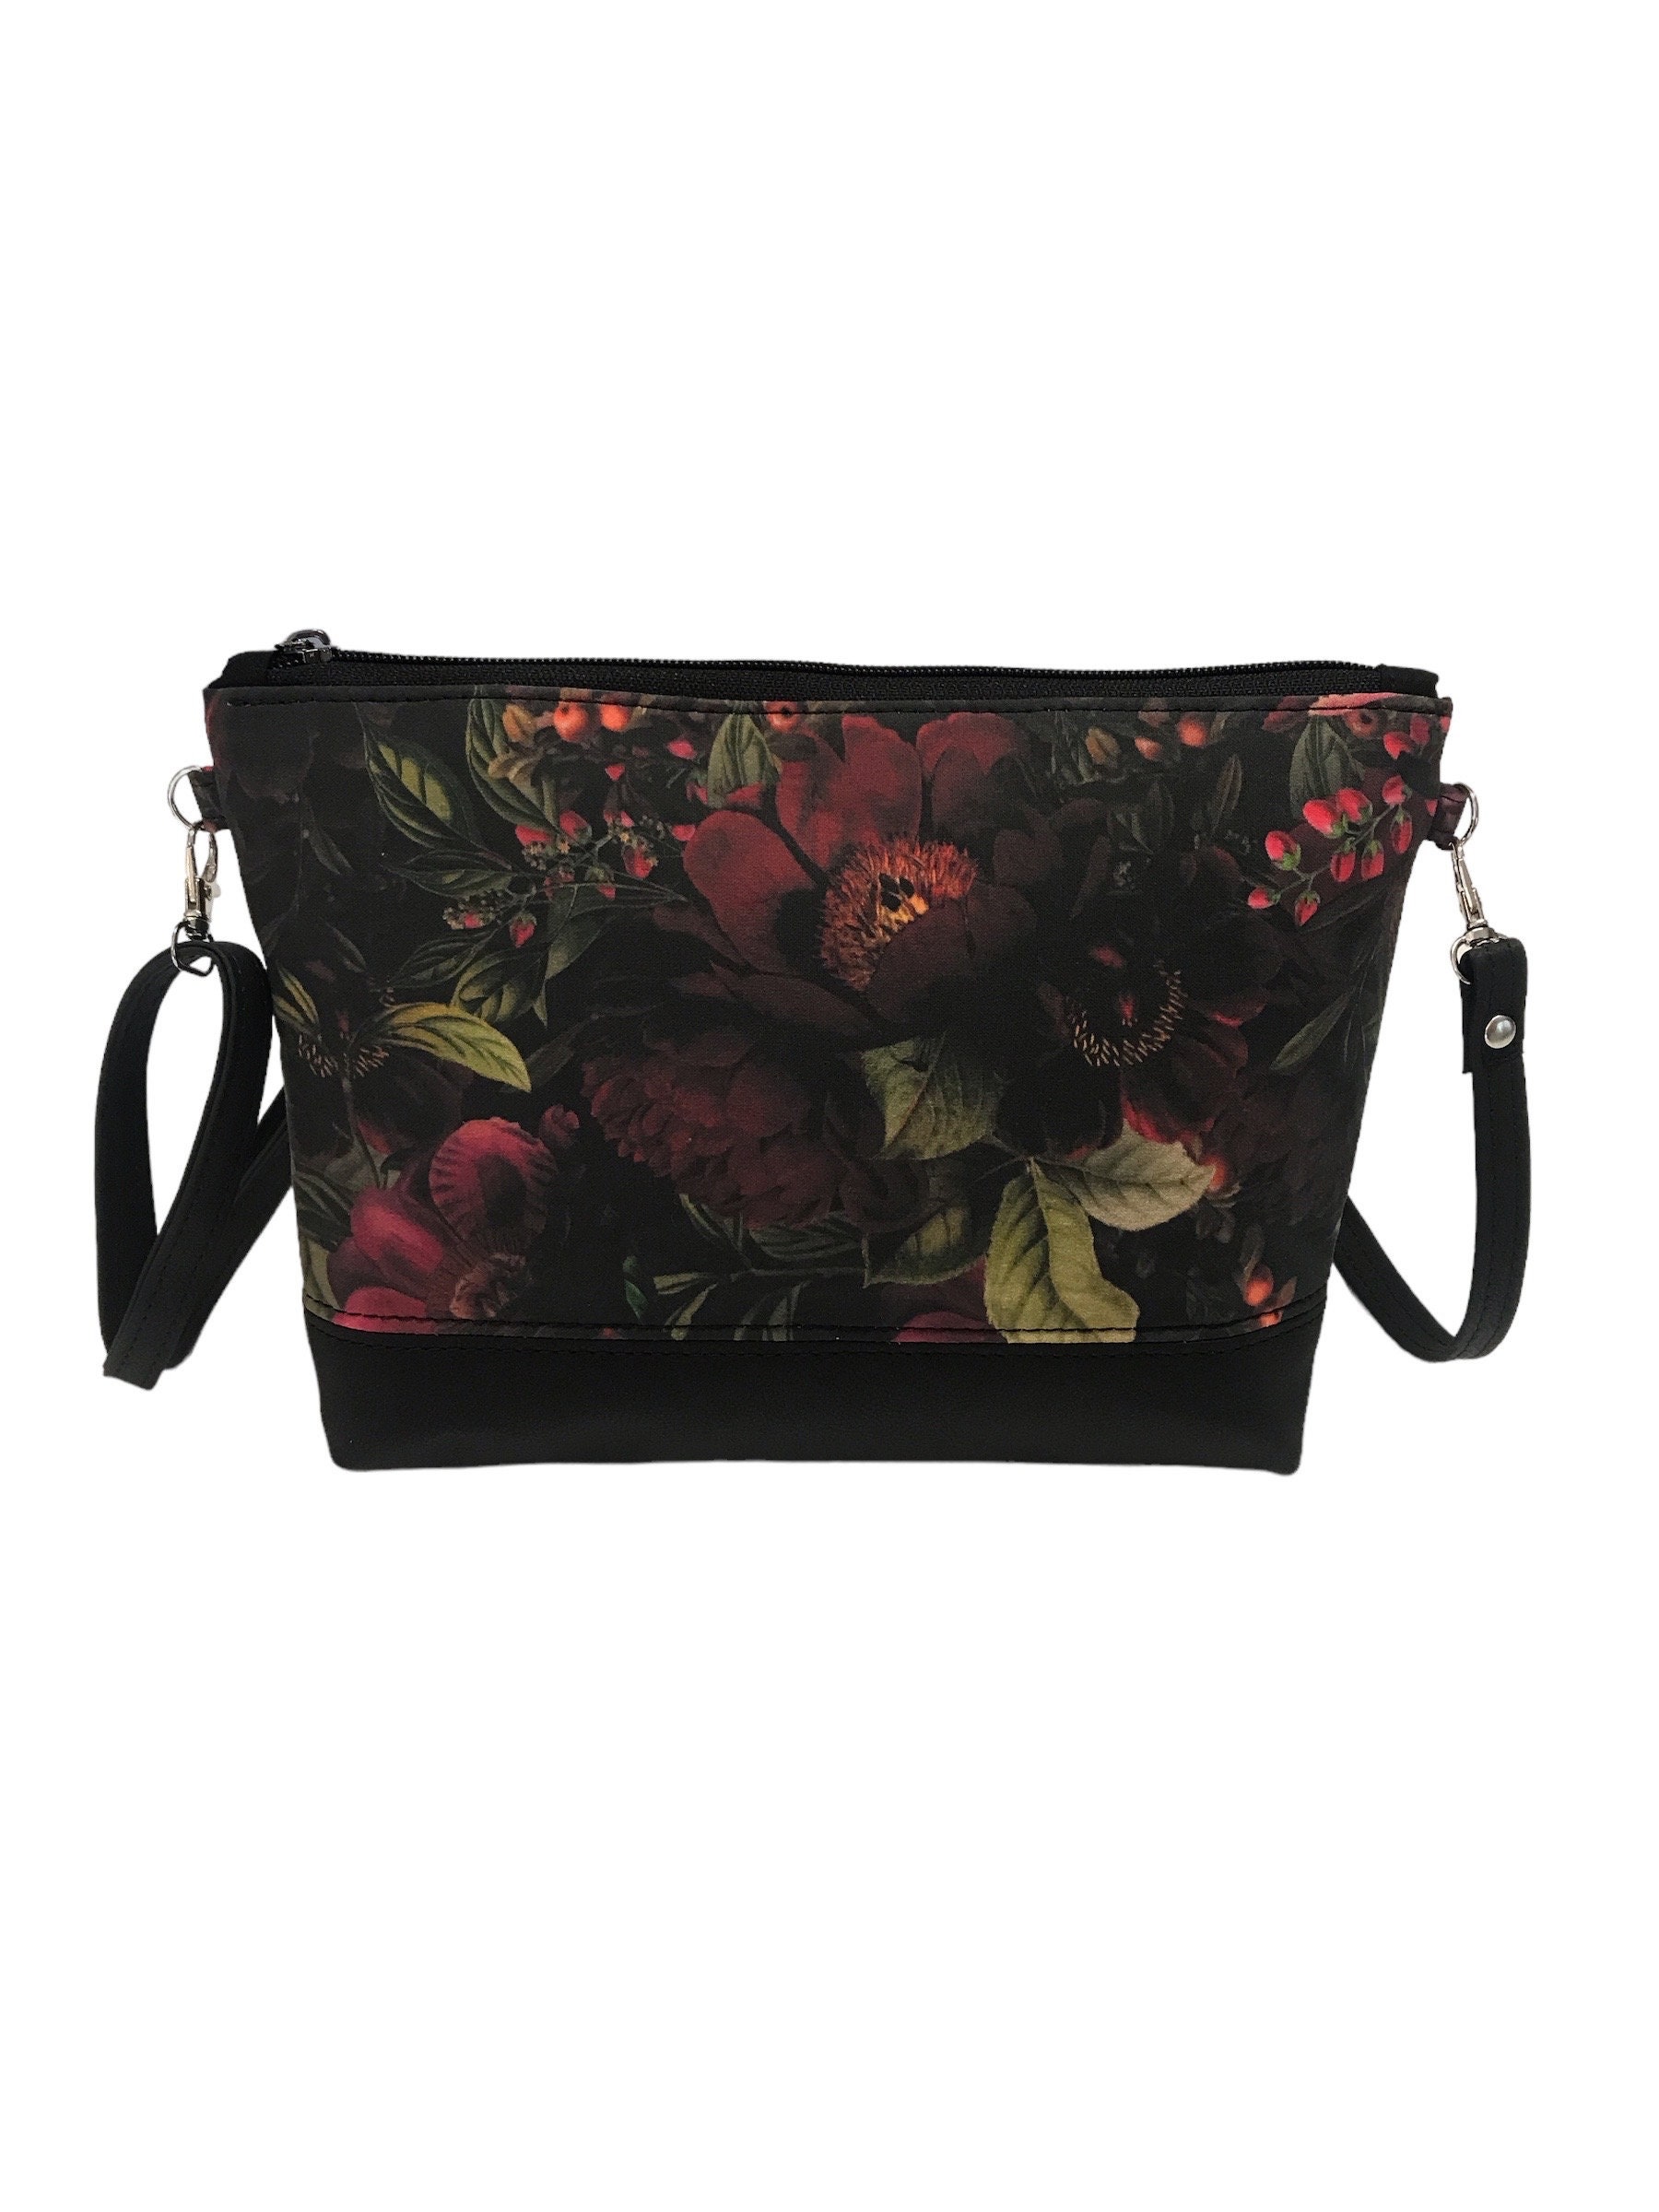 Floral Purse. Floral Handbag. Dark Floral Crossbody Bag. Small 